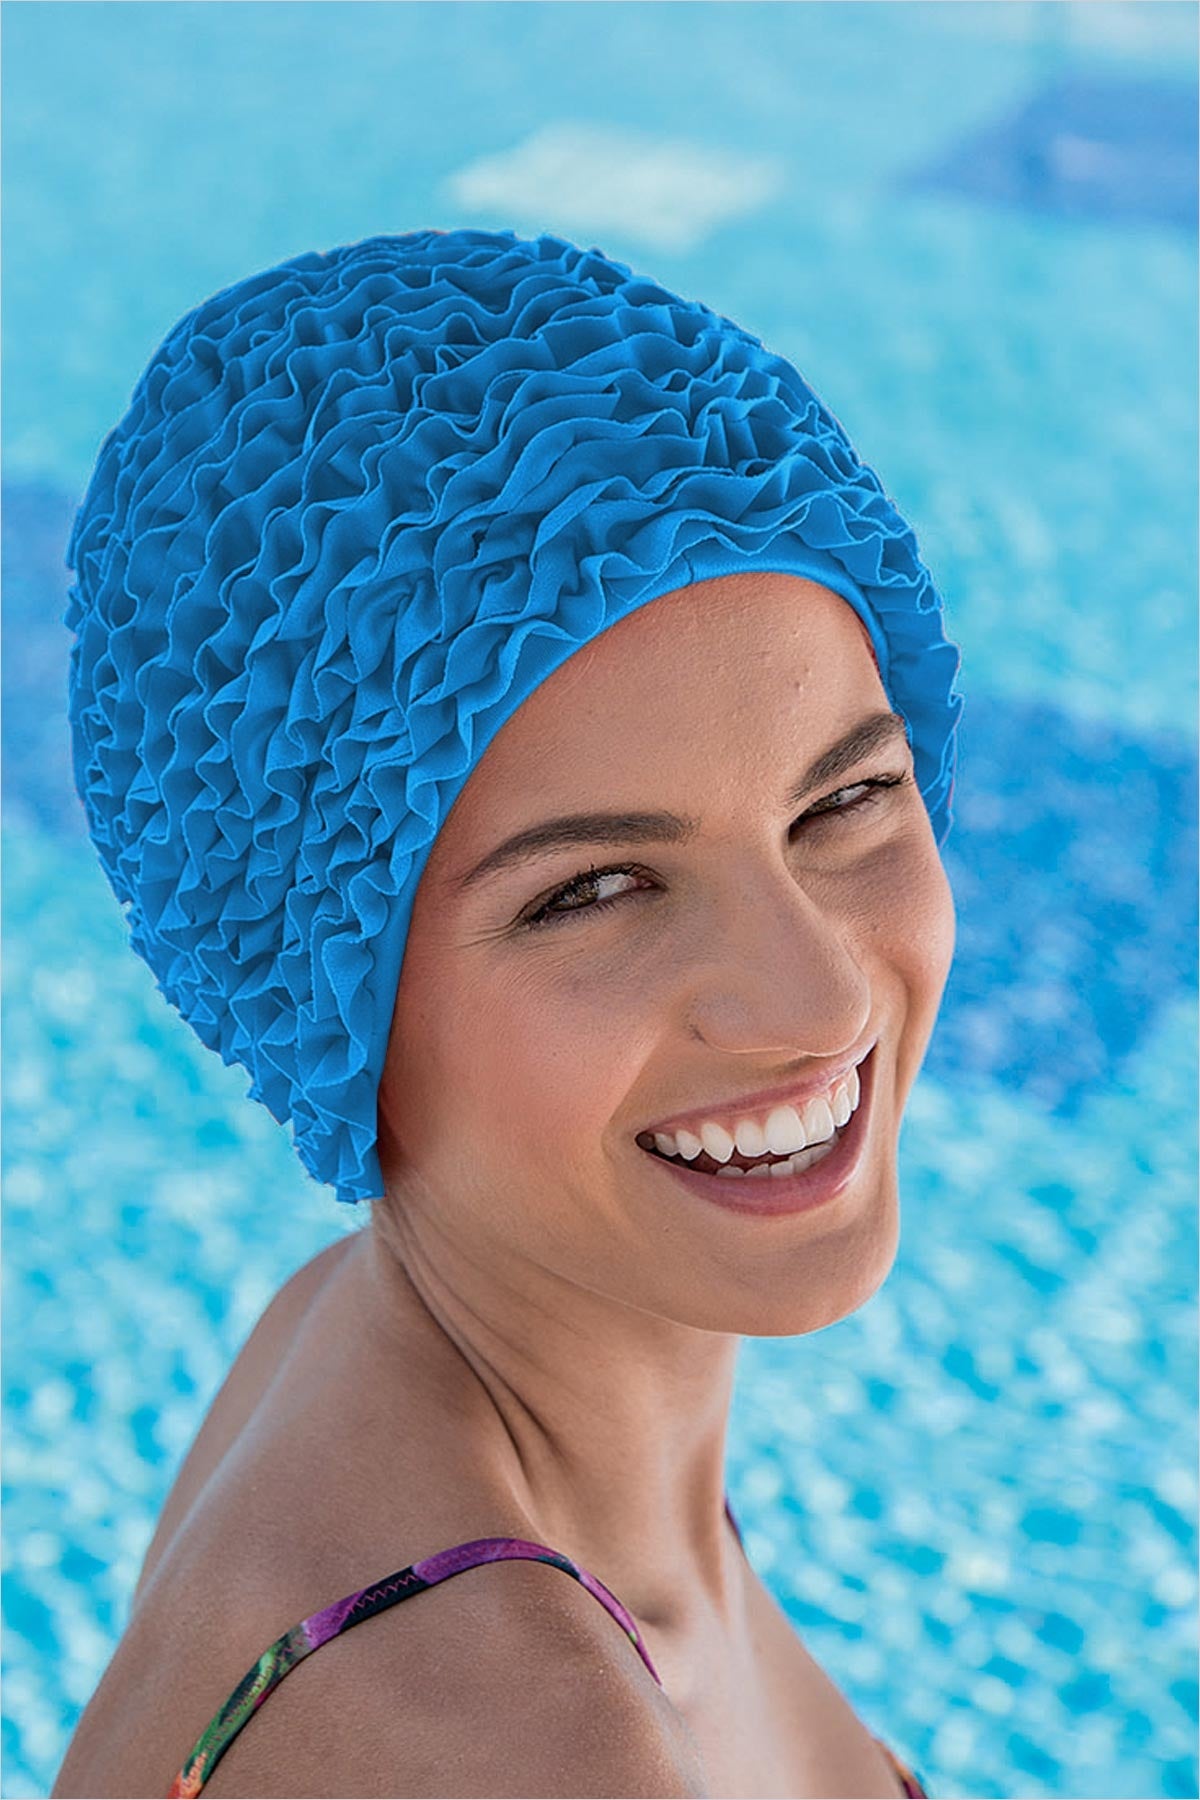 Fashy Ladies Swim Cap - Frill Swim Hat Blue - One Size